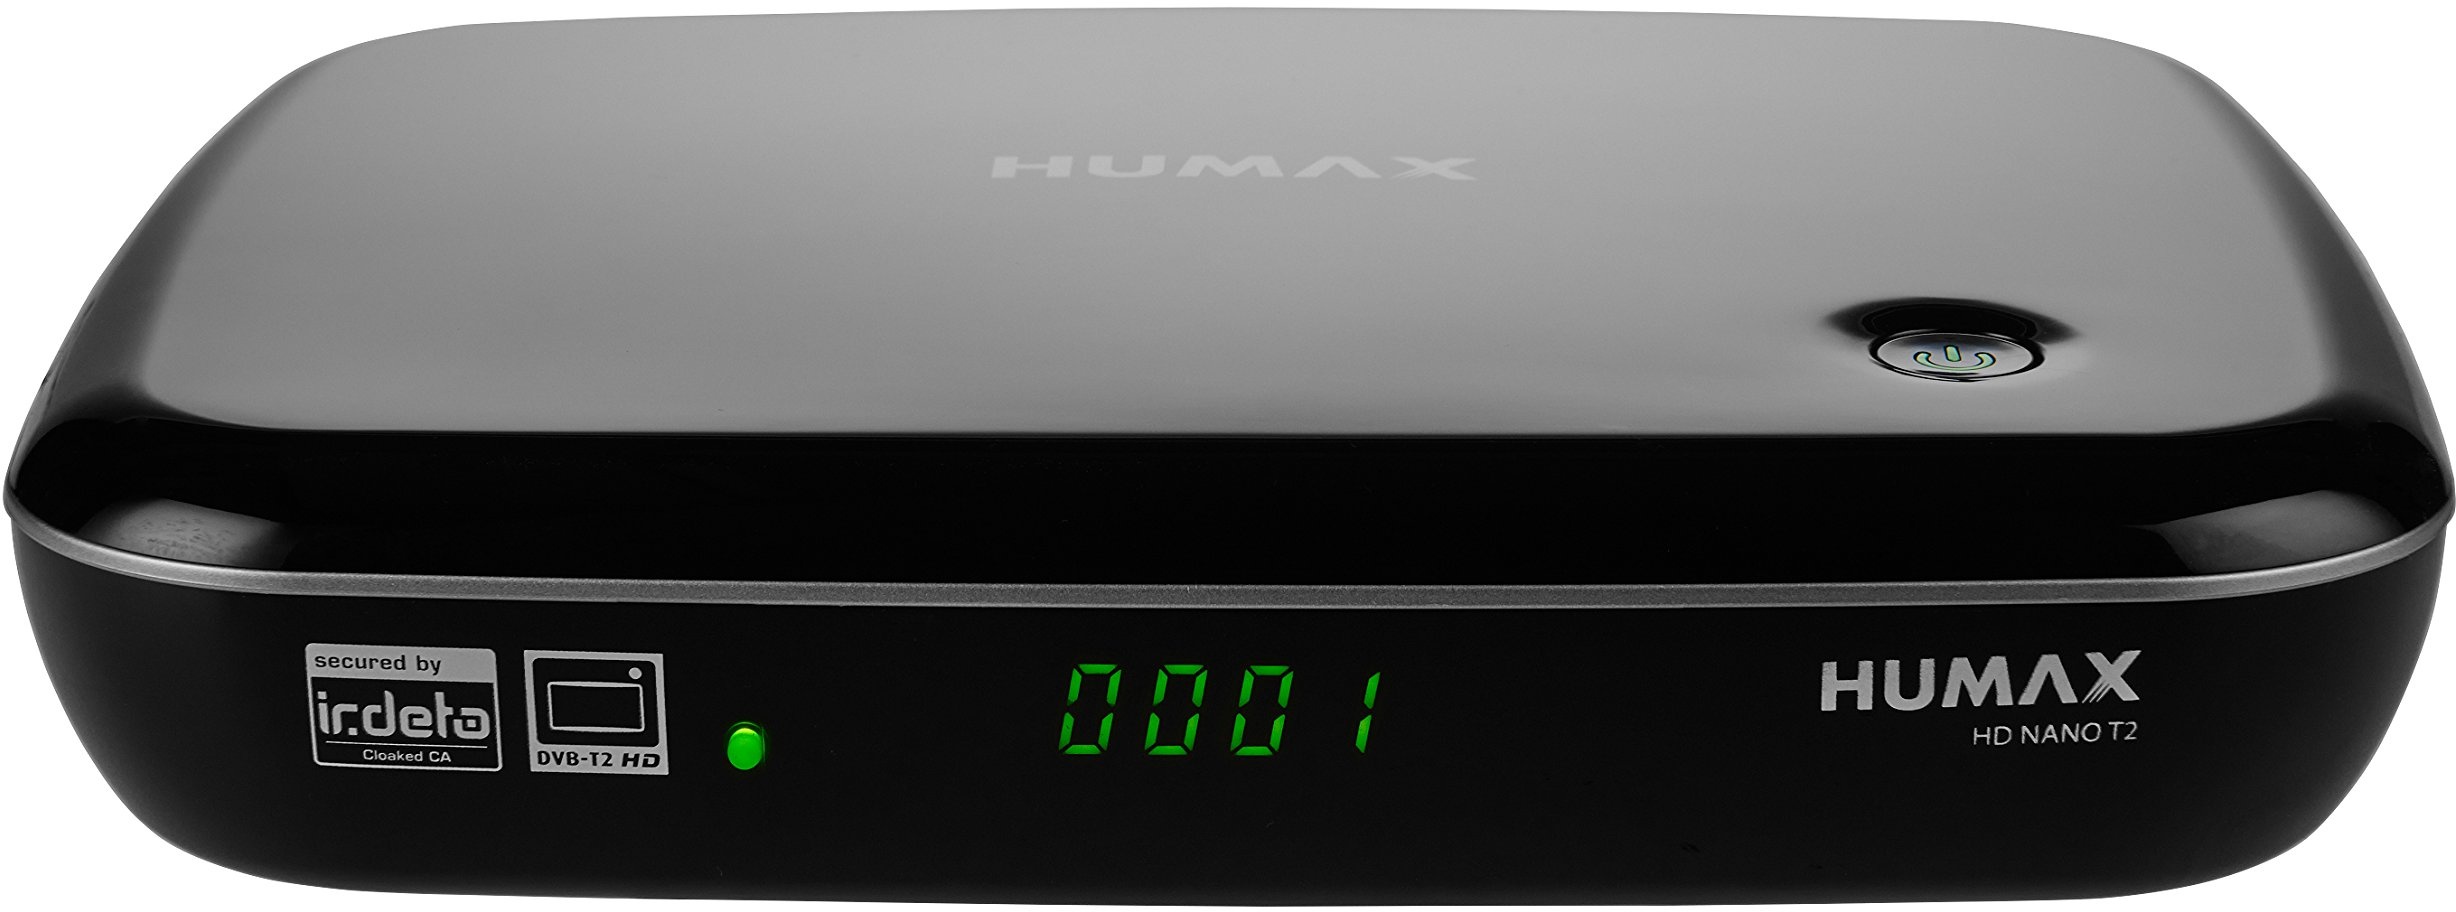 Humax Digital HD NANO T2 HD-Receiver (DVB-T2/T, HbbTV, PVR-Ready, freenet TV, HDMI, USB) Schwarz